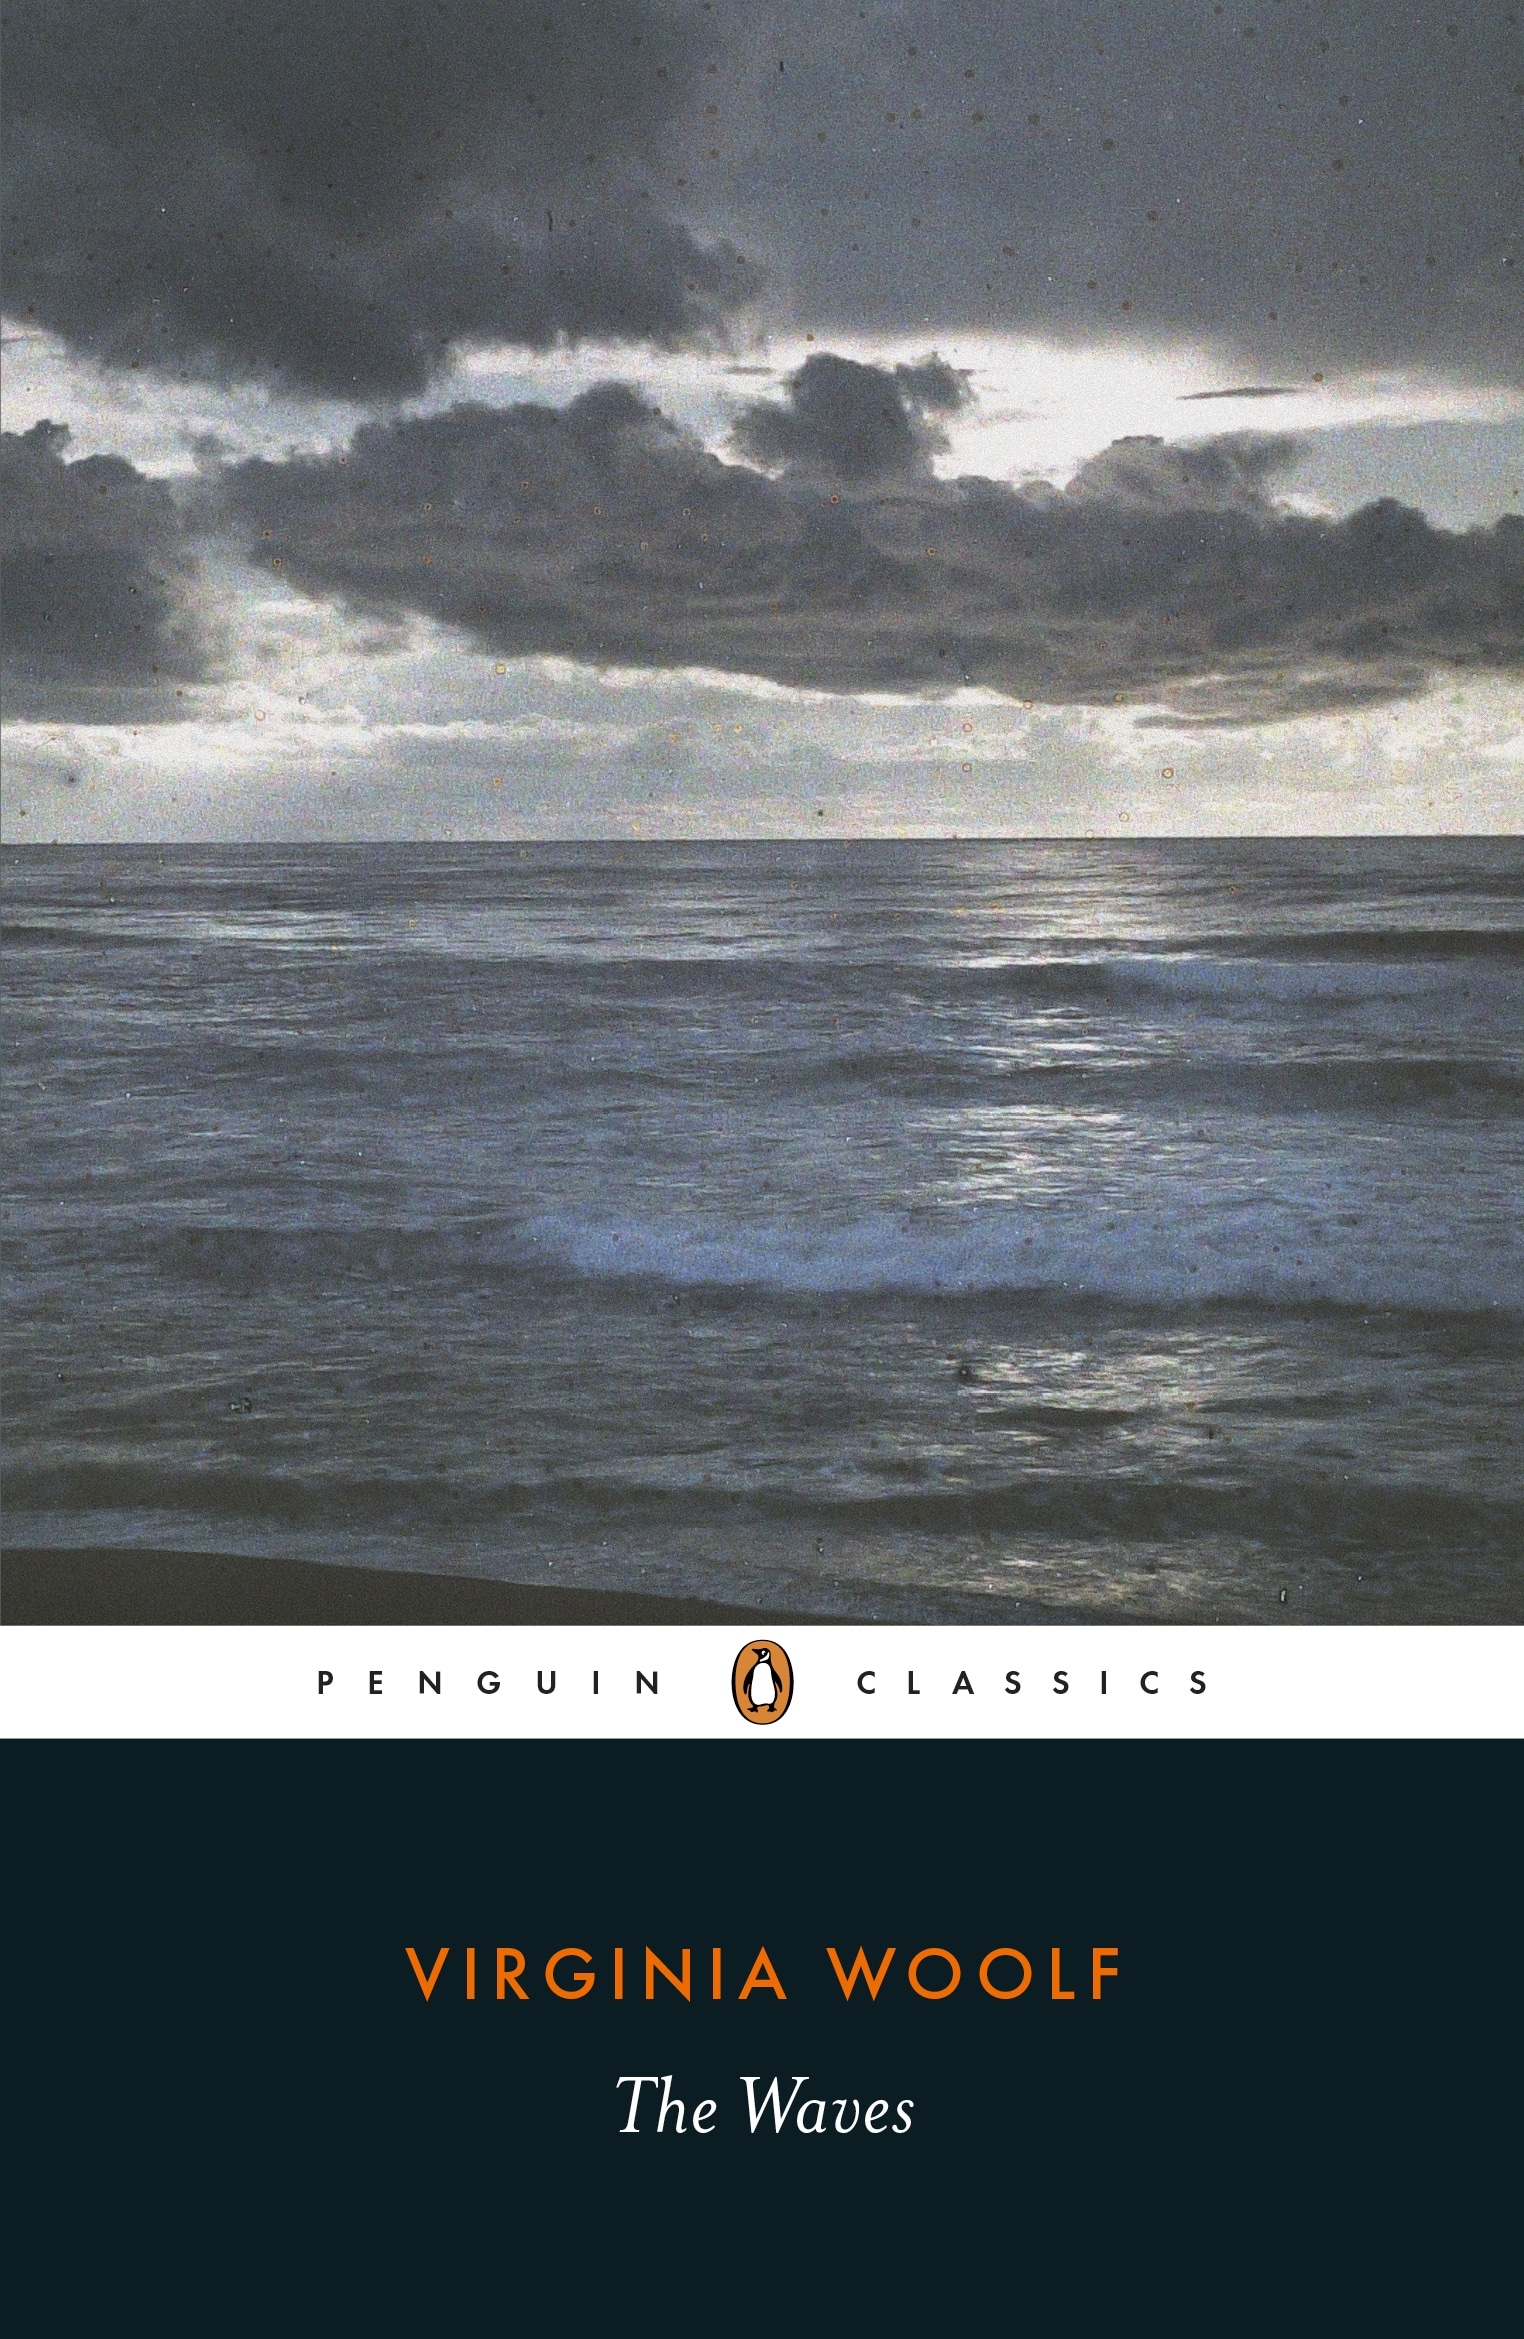 Book “The Waves” by Virginia Woolf, Kate Flint — April 4, 2019